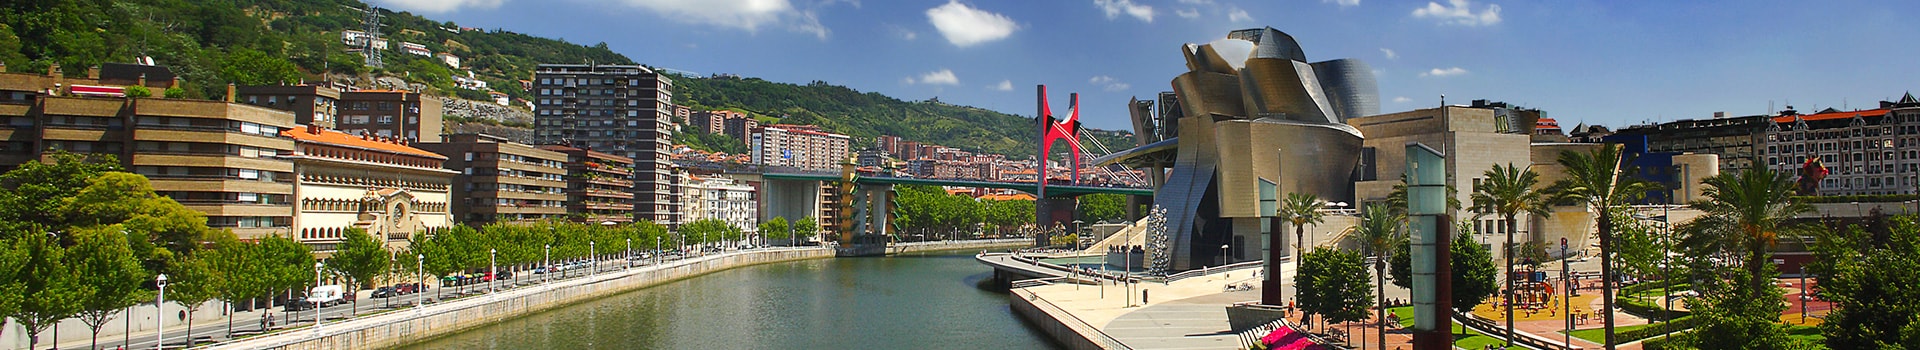 Prague - Bilbao